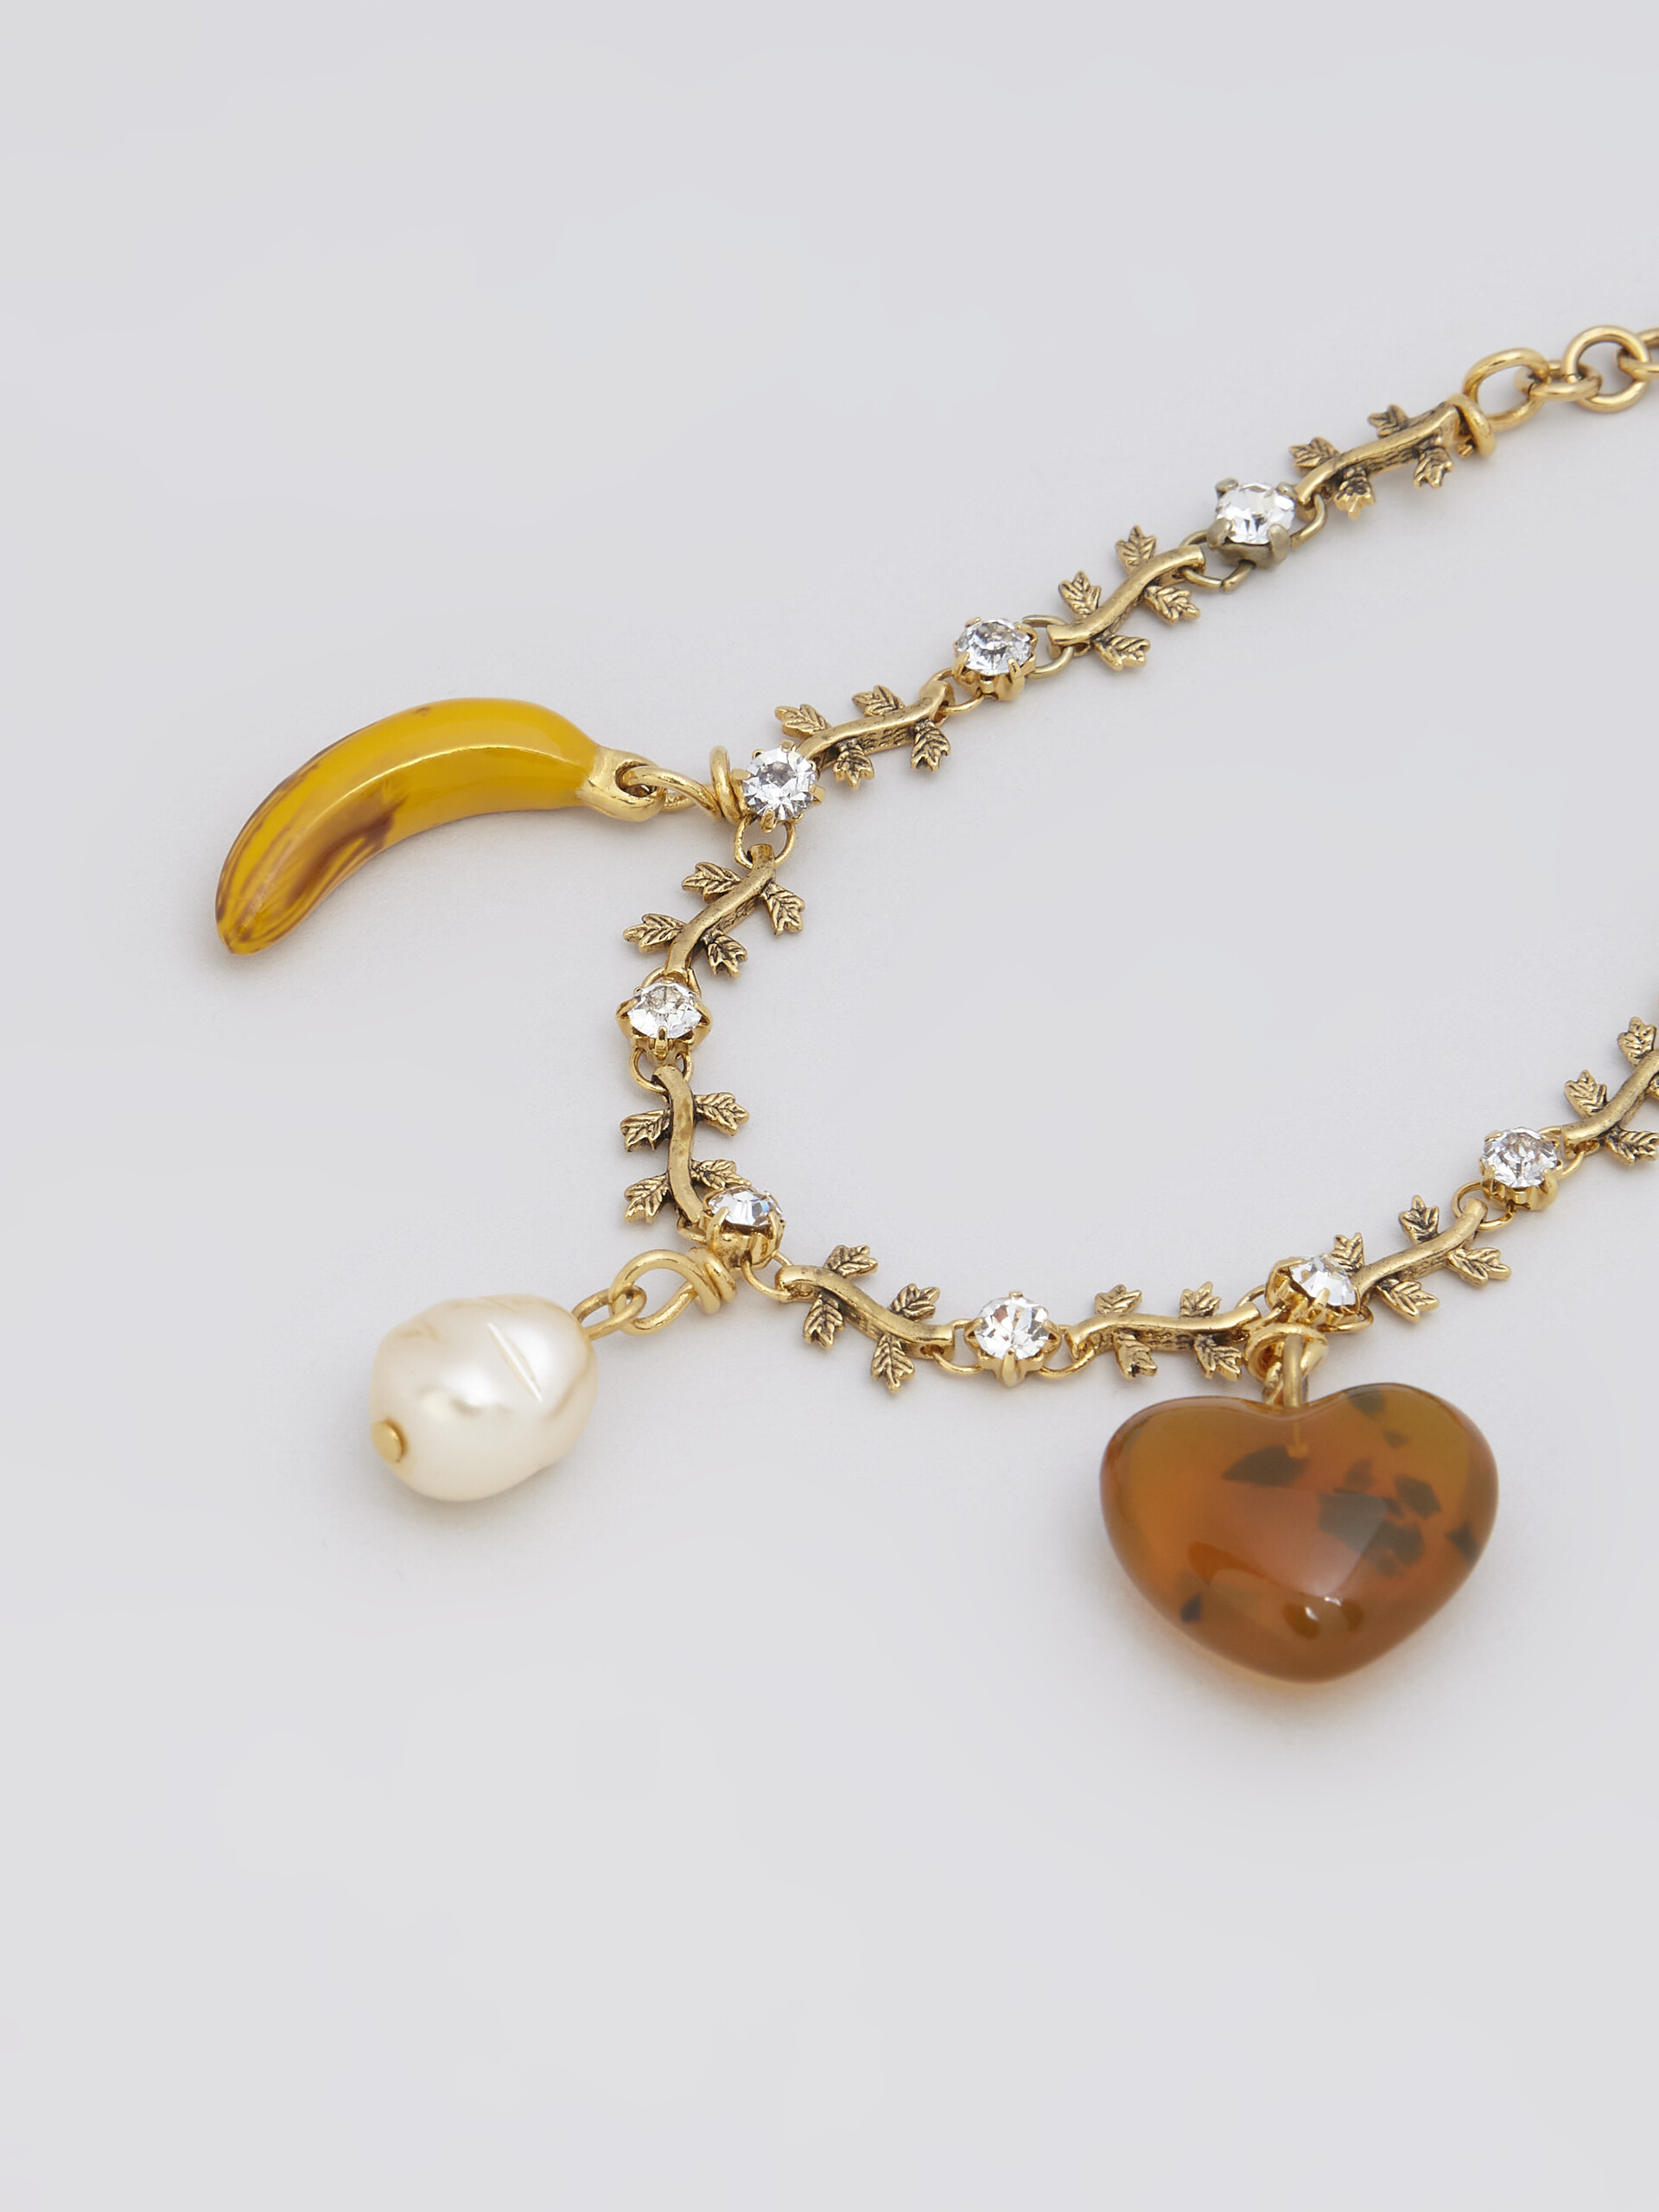 Brass glass and resin FOUND TREASURES bracelet - Bracelets - Image 4